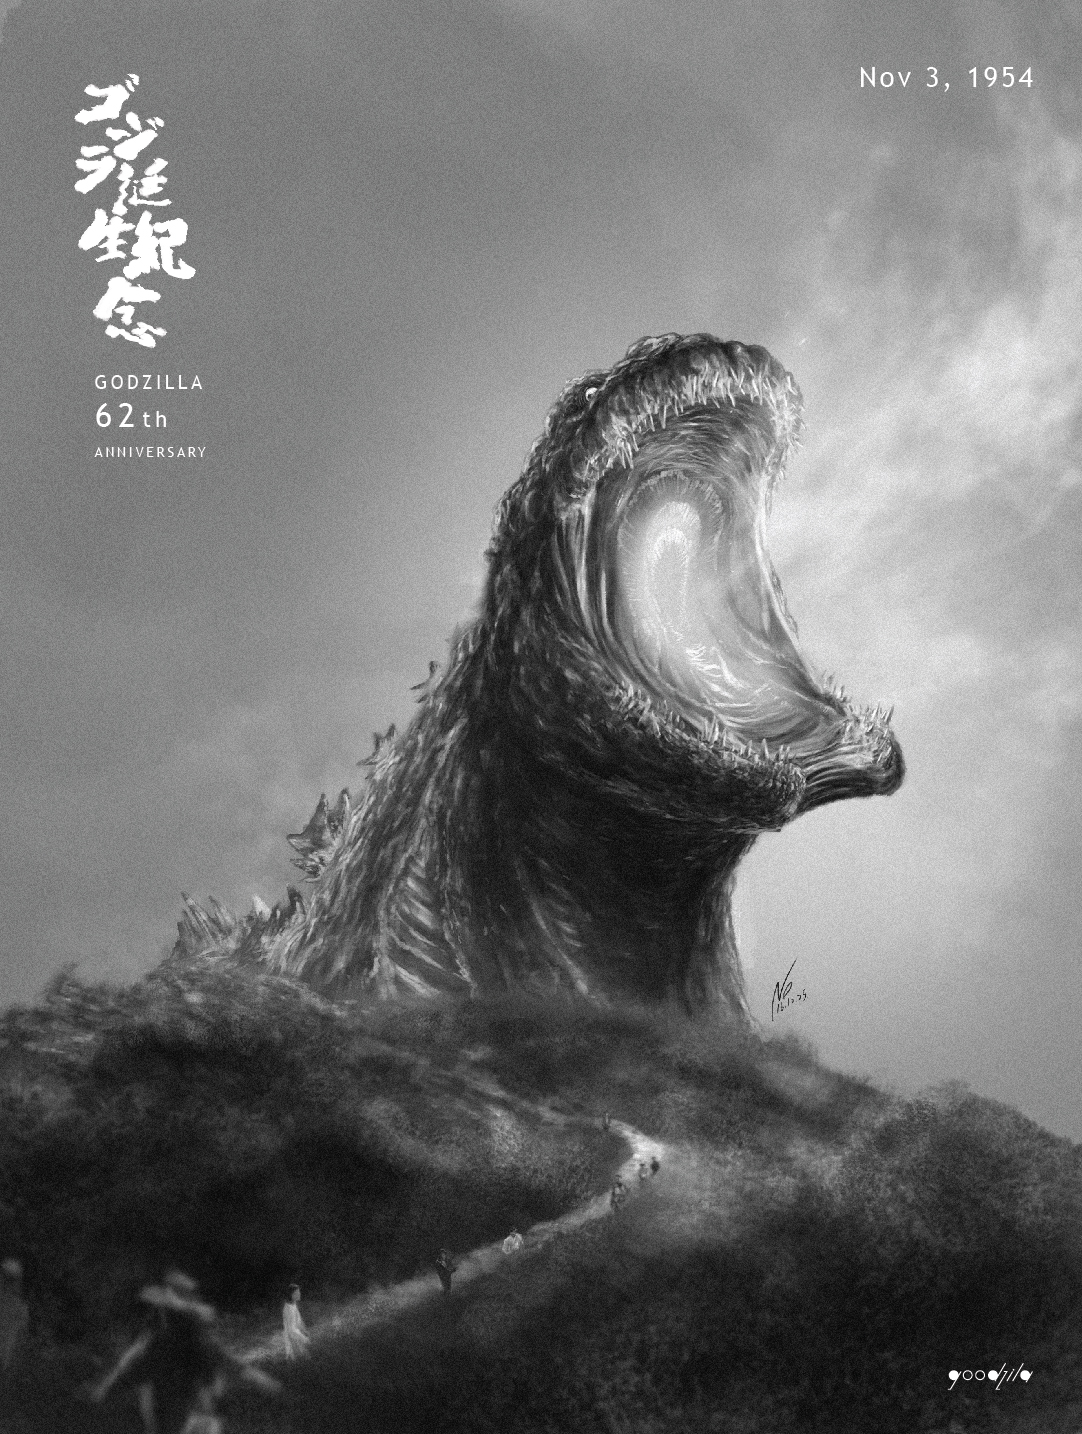 Godzilla 62 th Anniversary